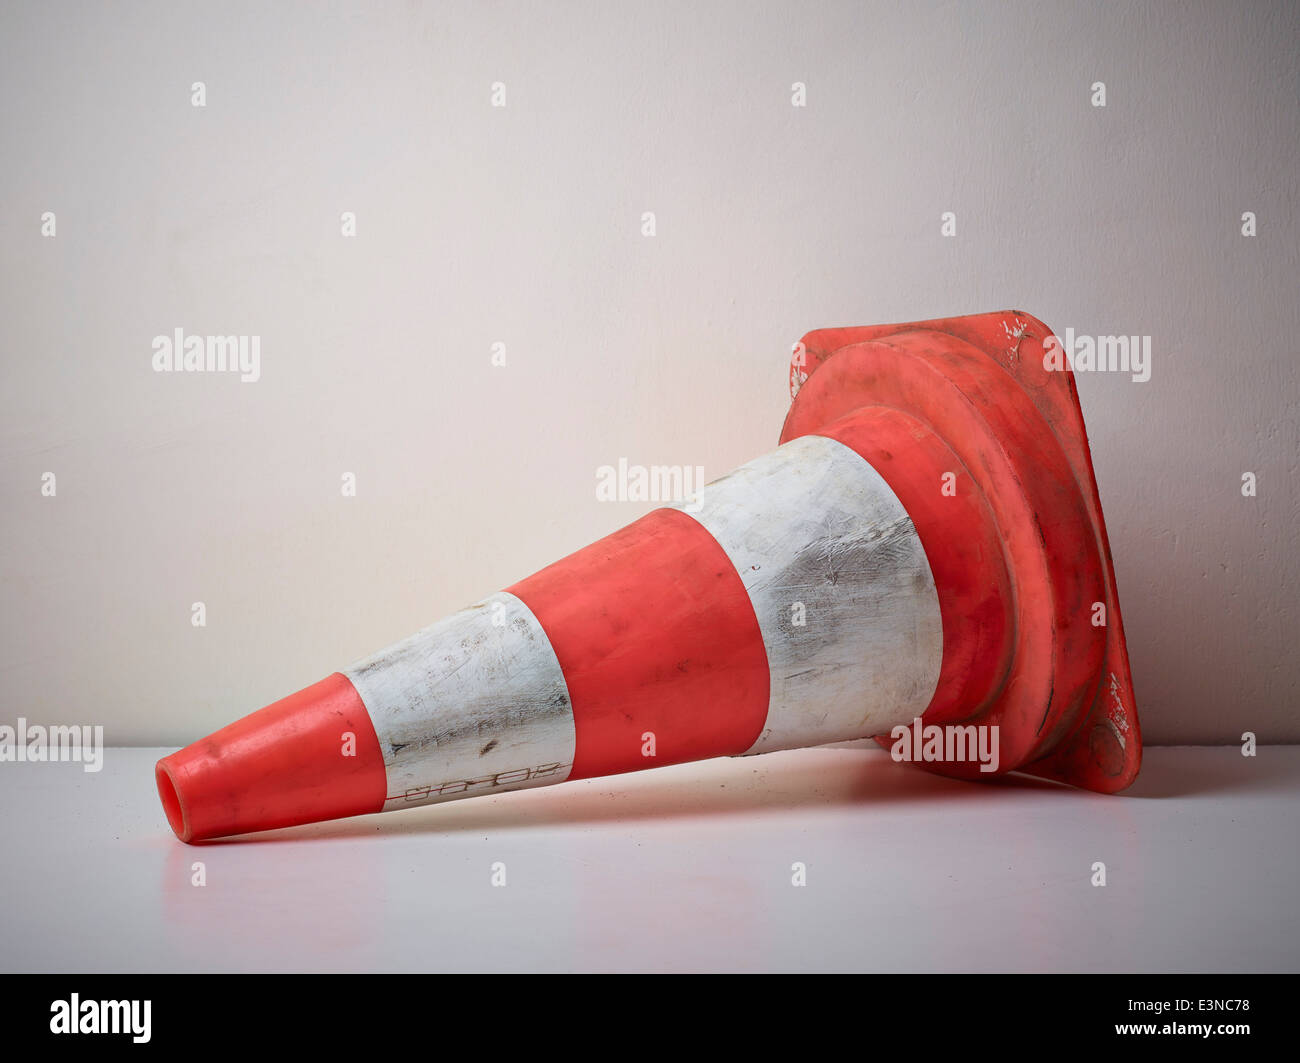 Traffic cone fallen on floor Stock Photo